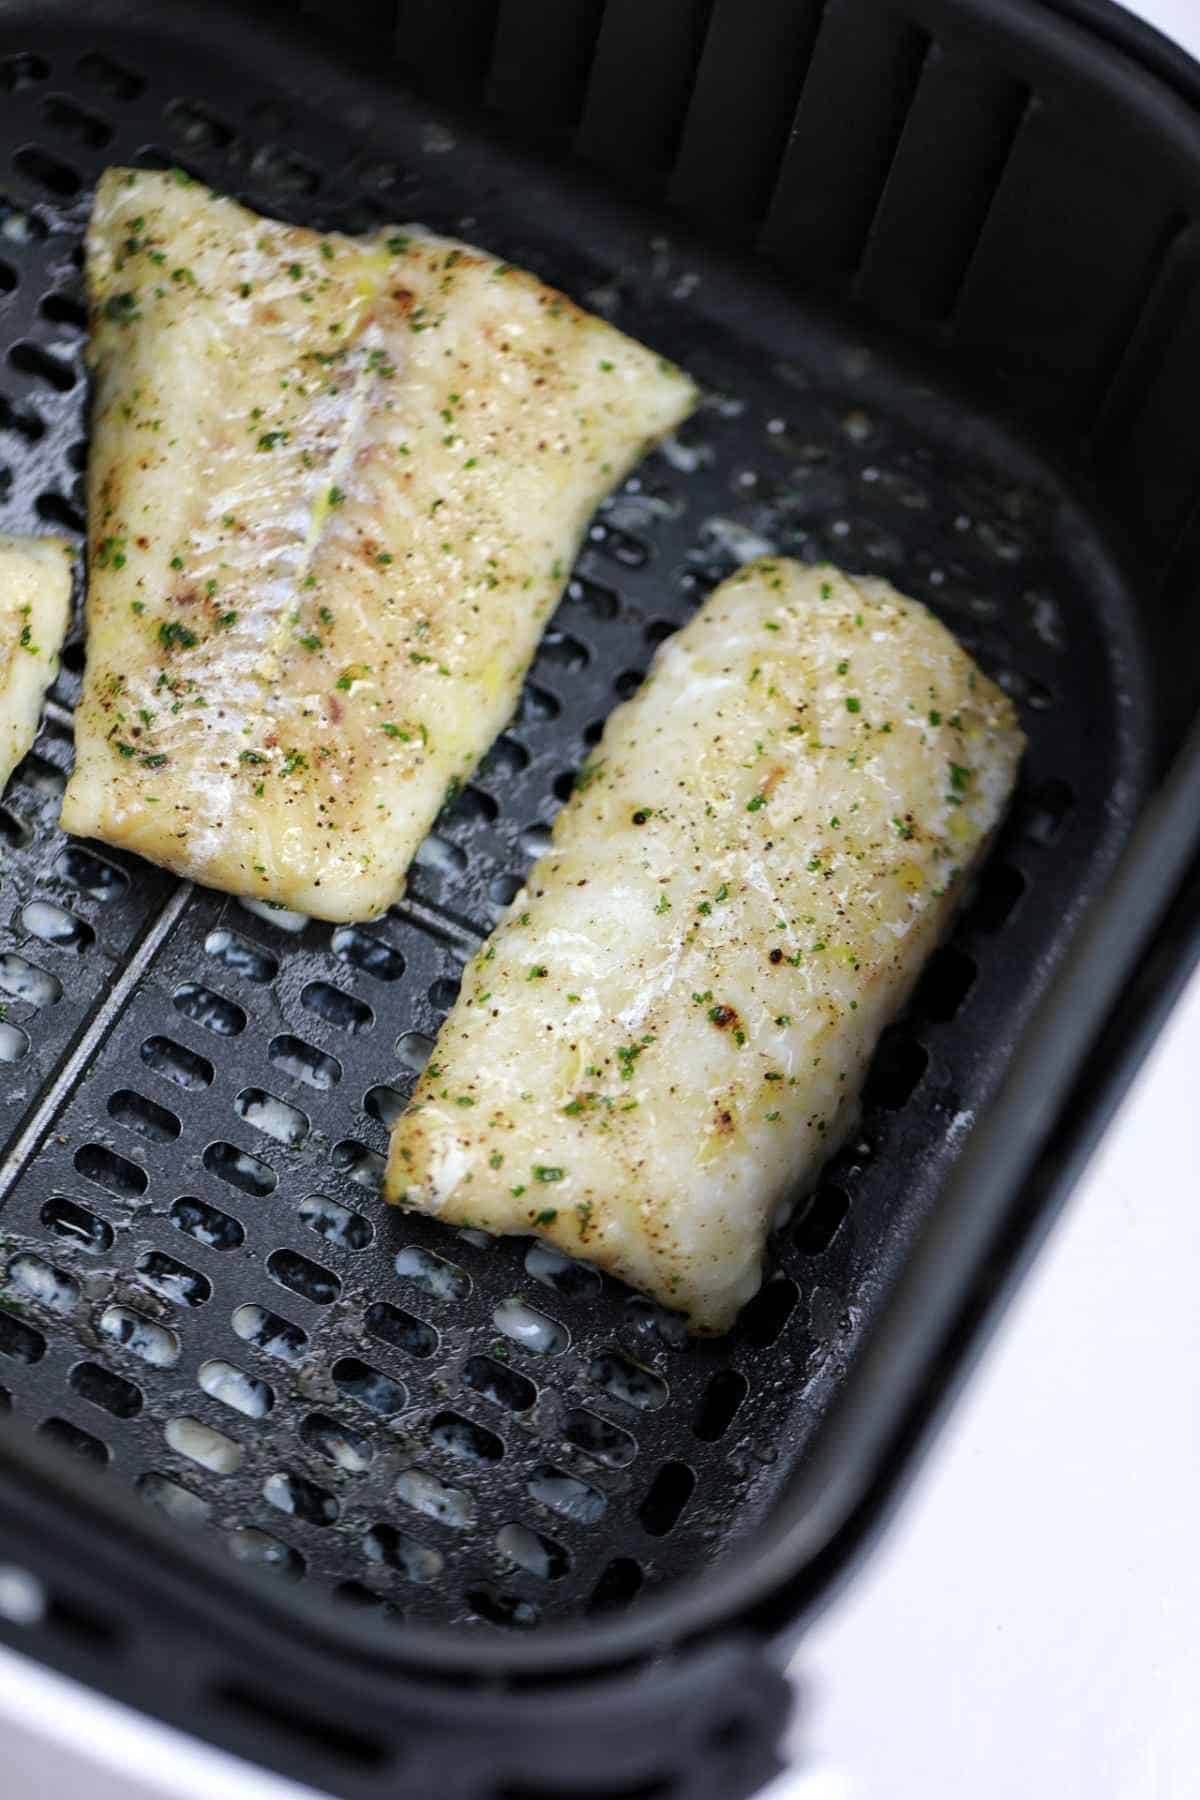 cooked frozen cod fillets in air fryer basket.